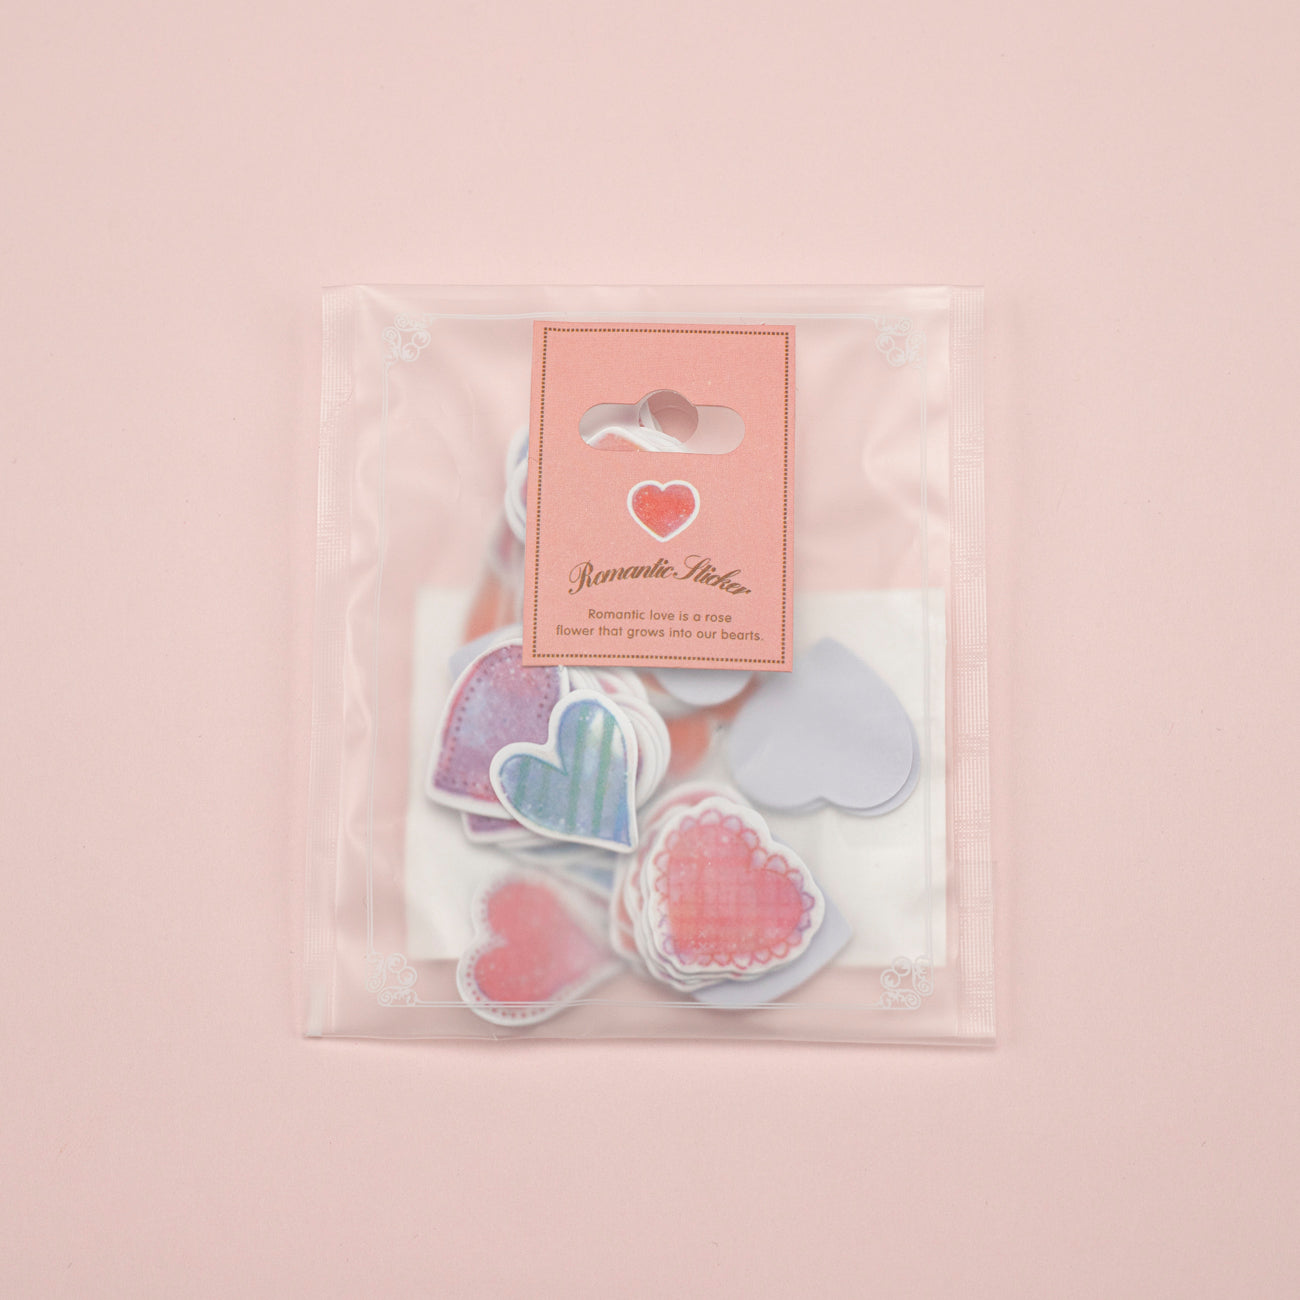 Kamio Watercolor Stickers - Heart